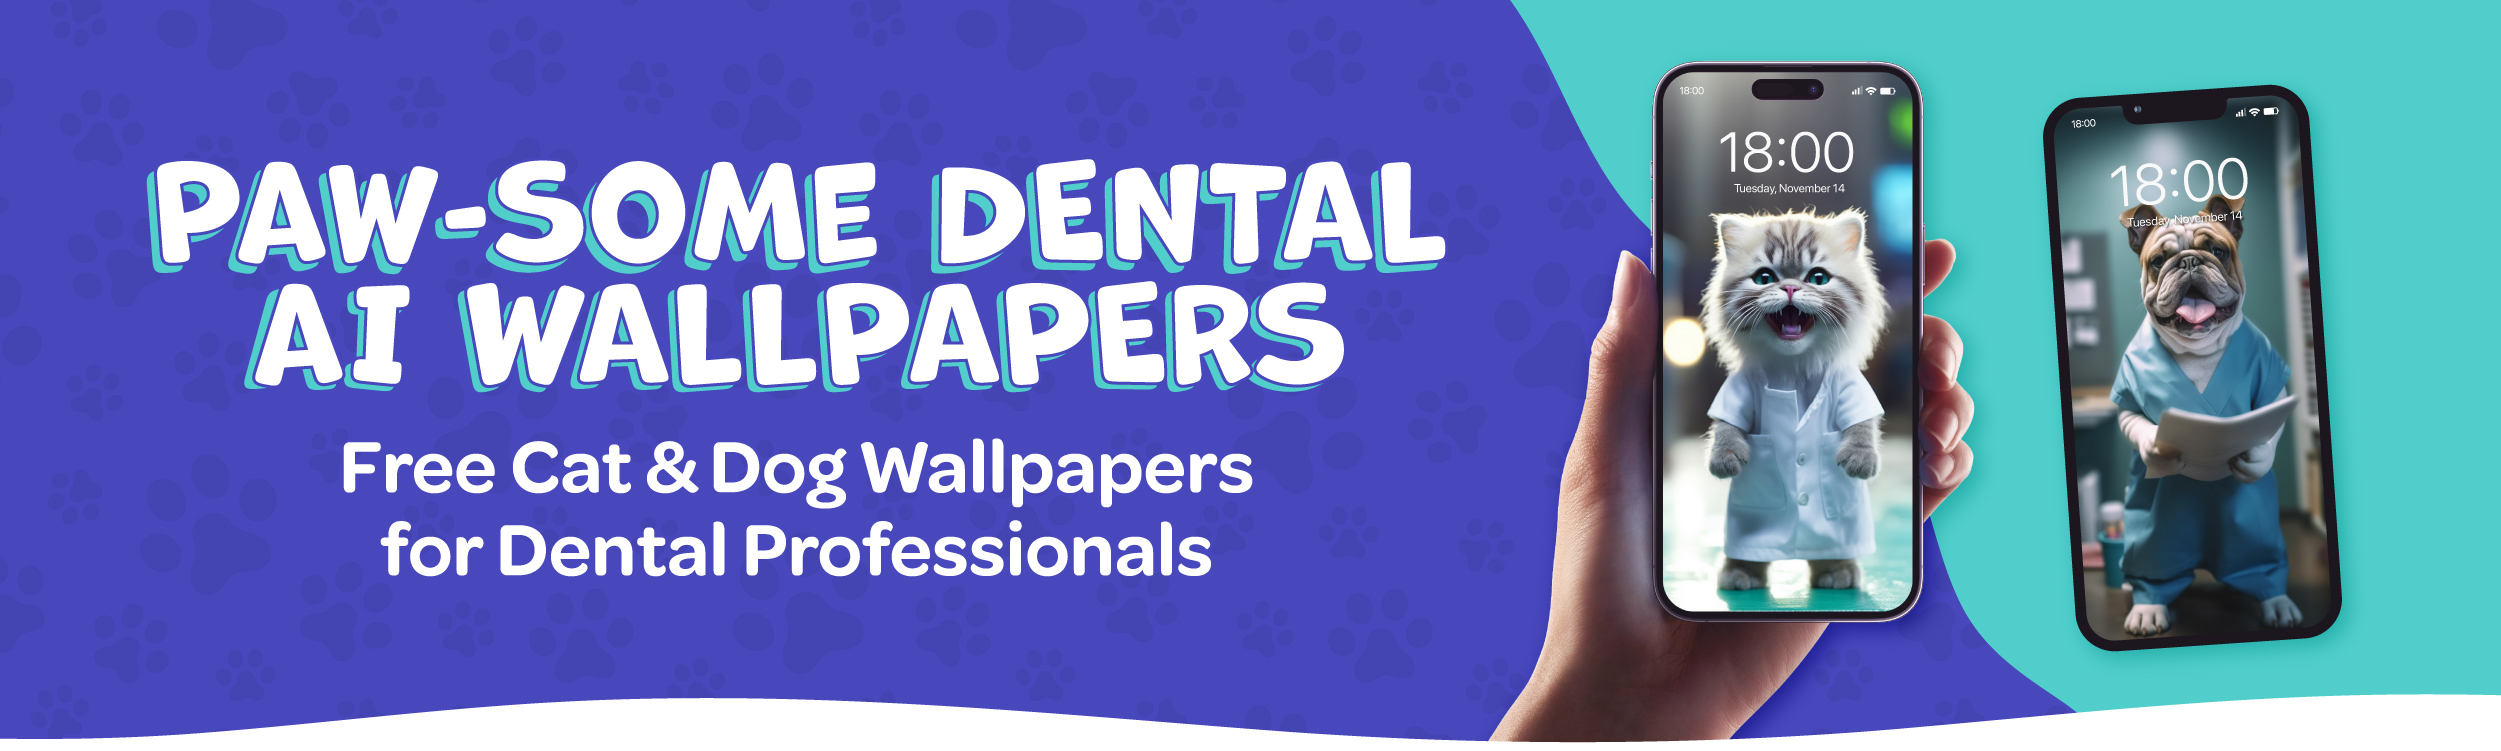 pawsome-dental-ai-wallpapers_LP-header-desktop